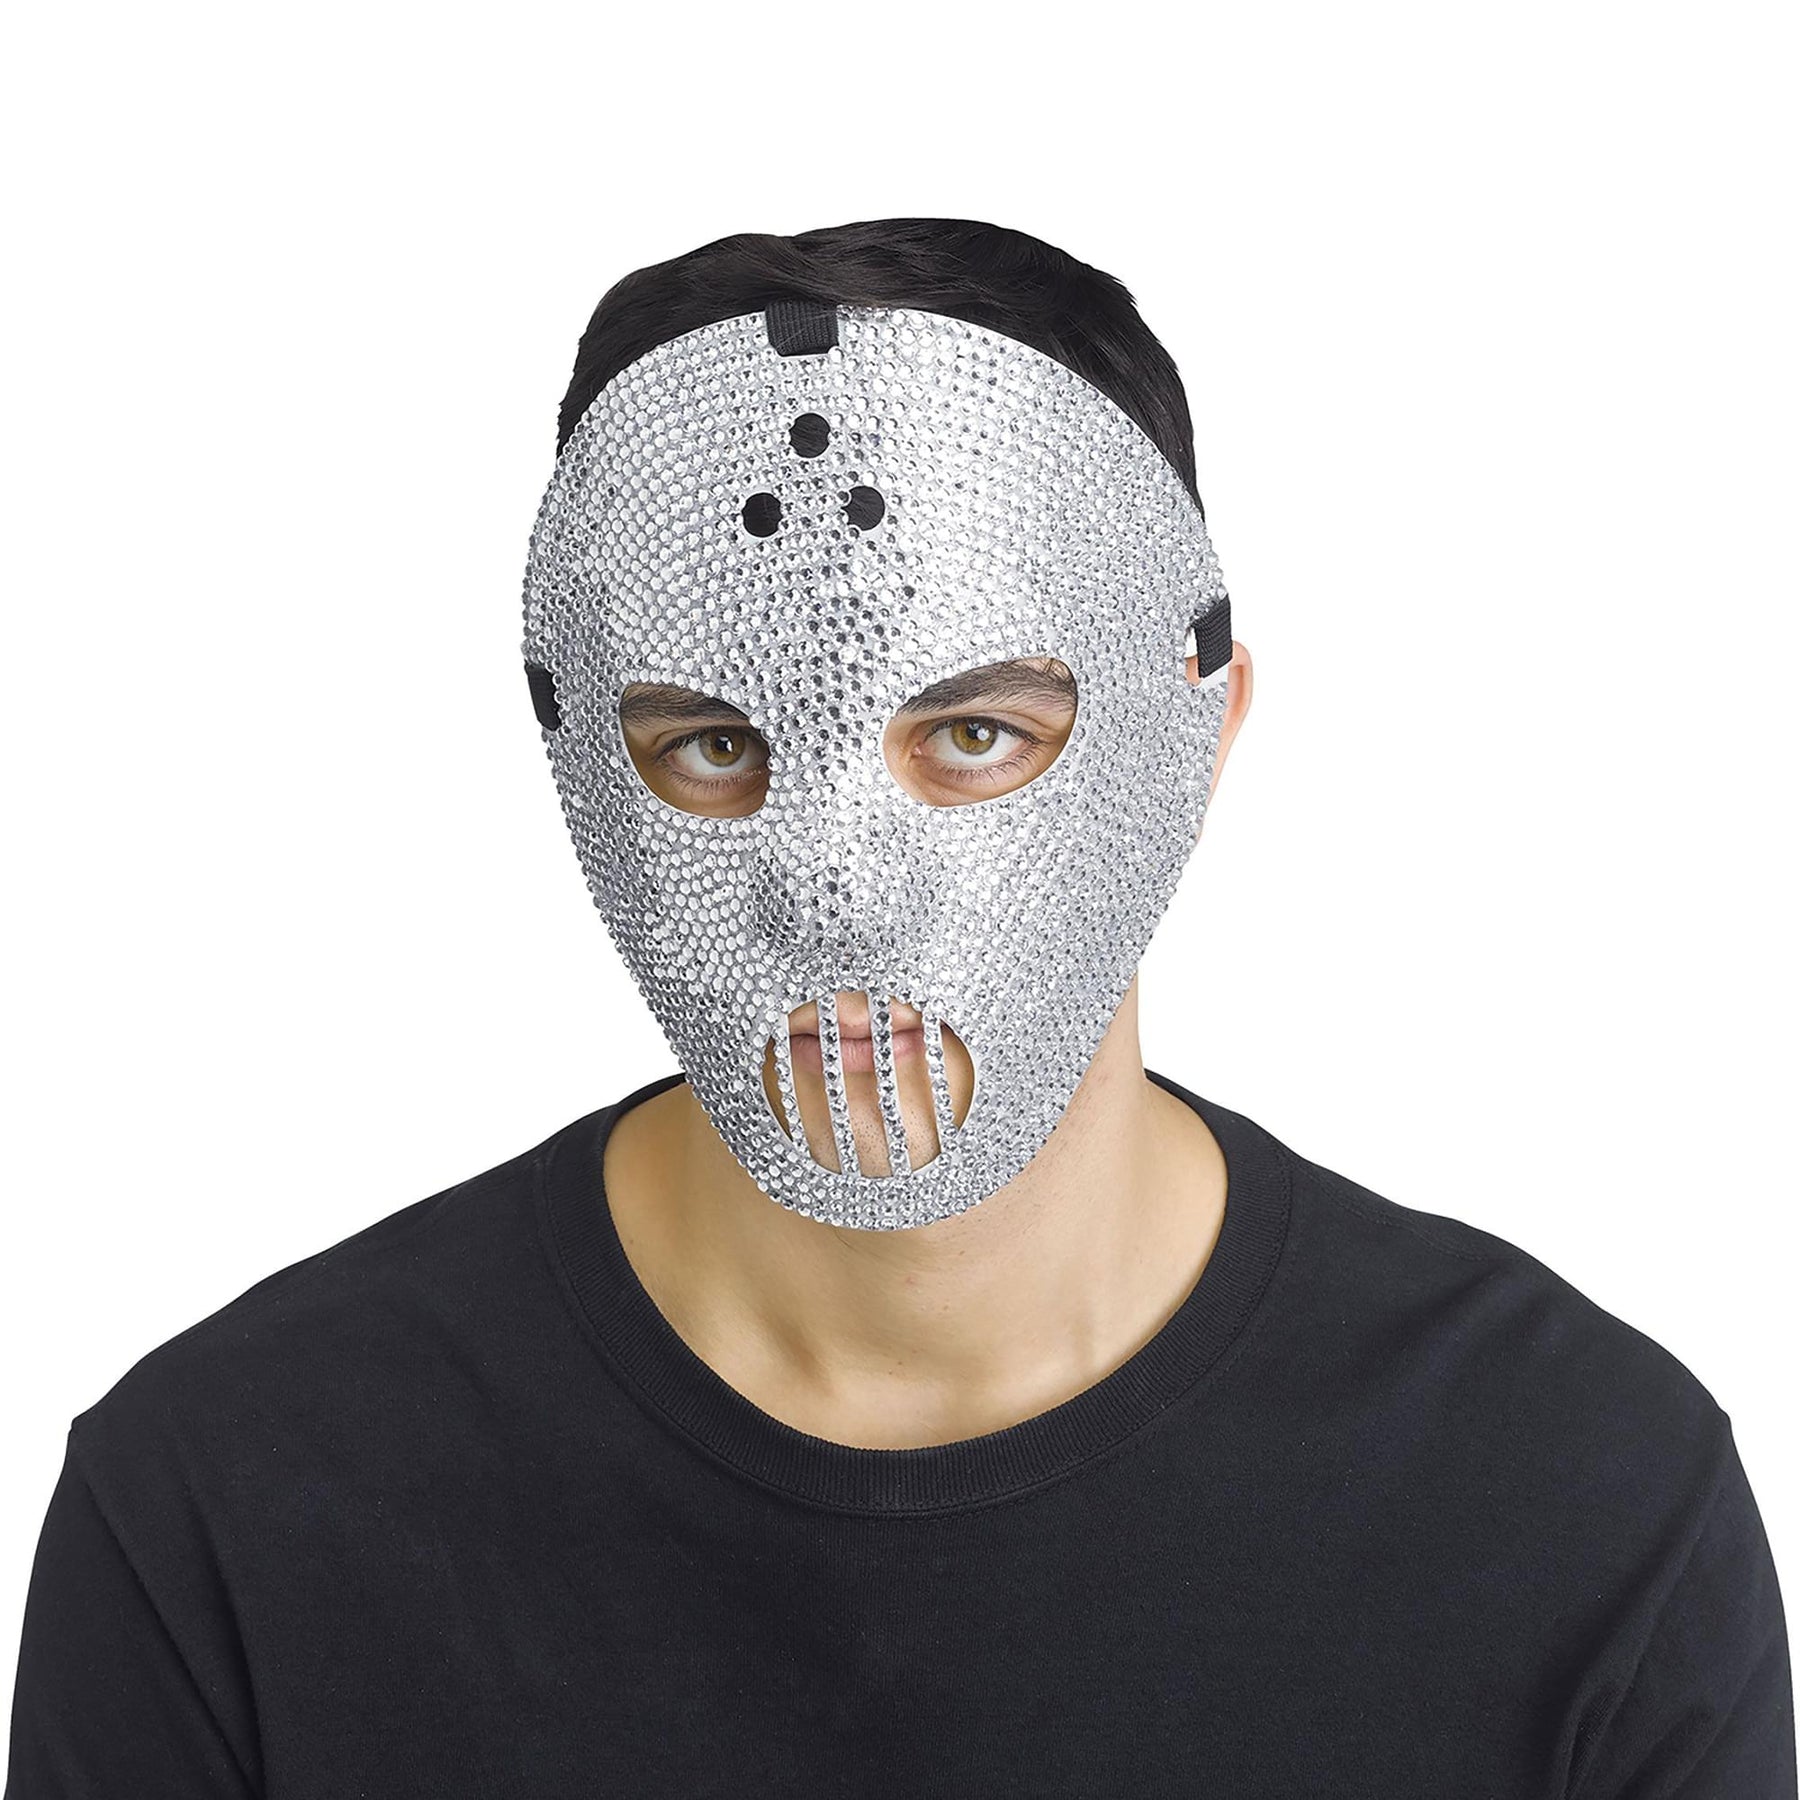 Rhinestone Hockey Adult Costume Mask